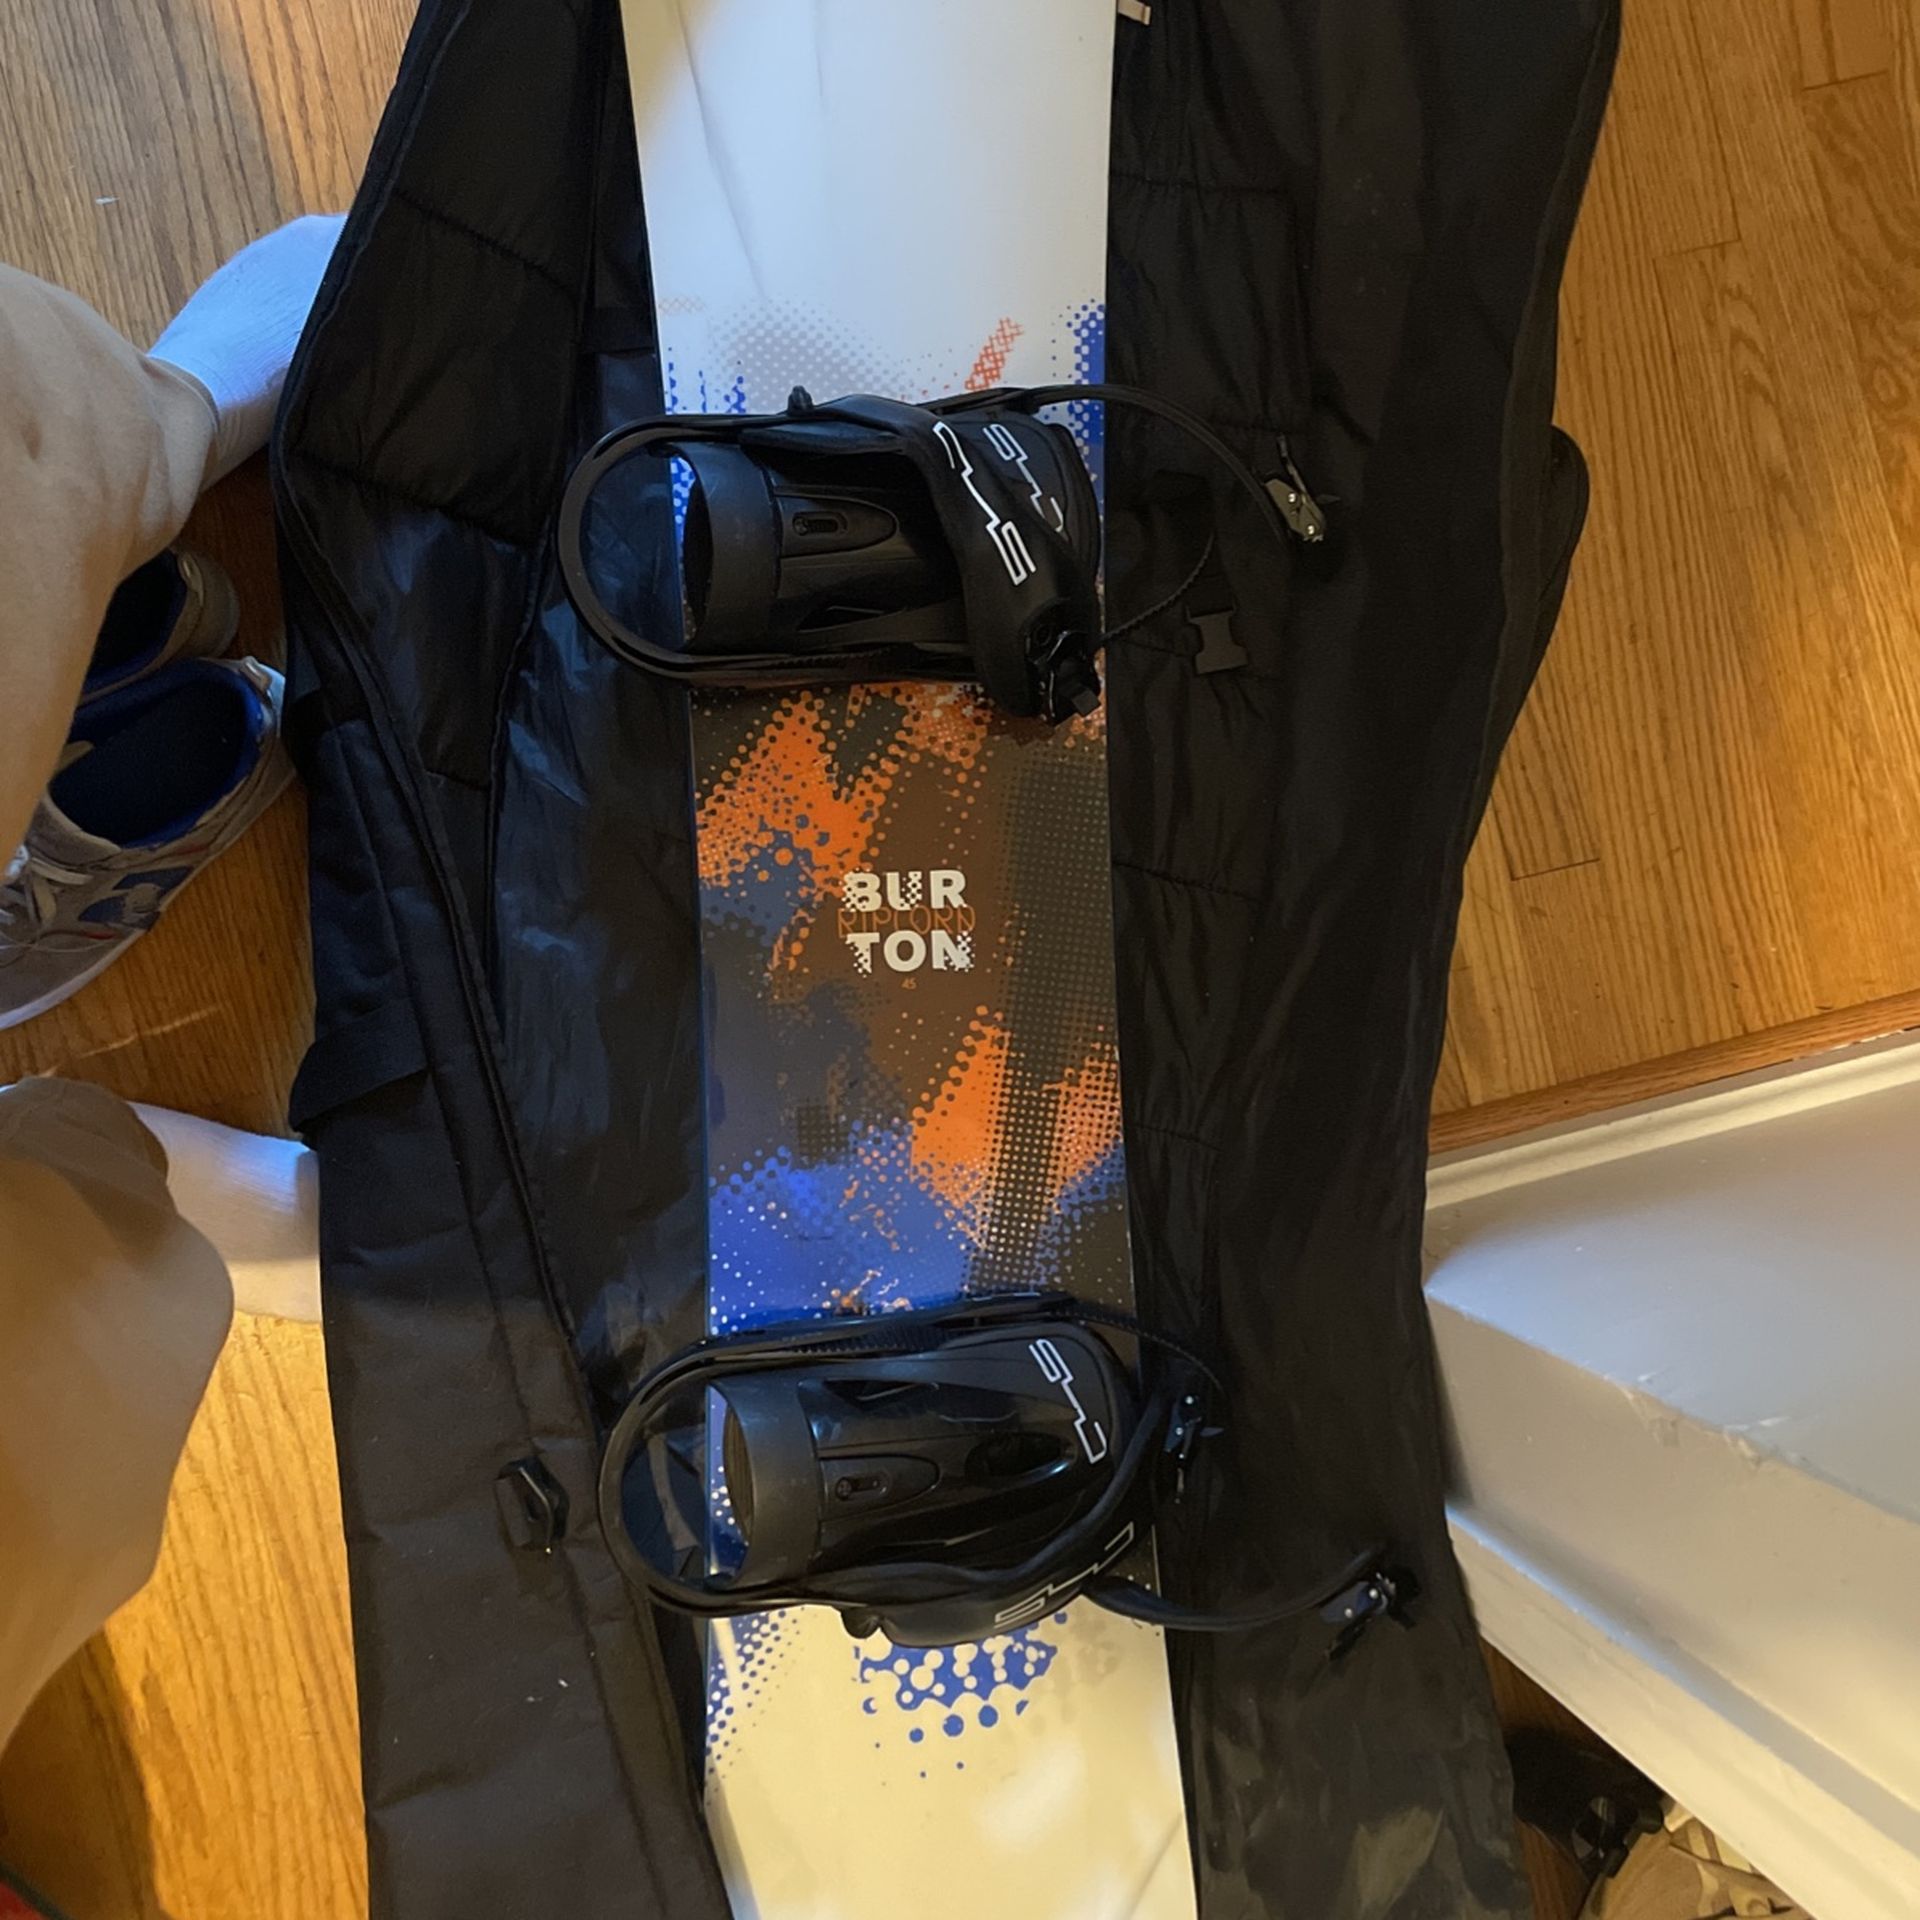 Burton RipCord 145 cm snowboard with Grayne bag